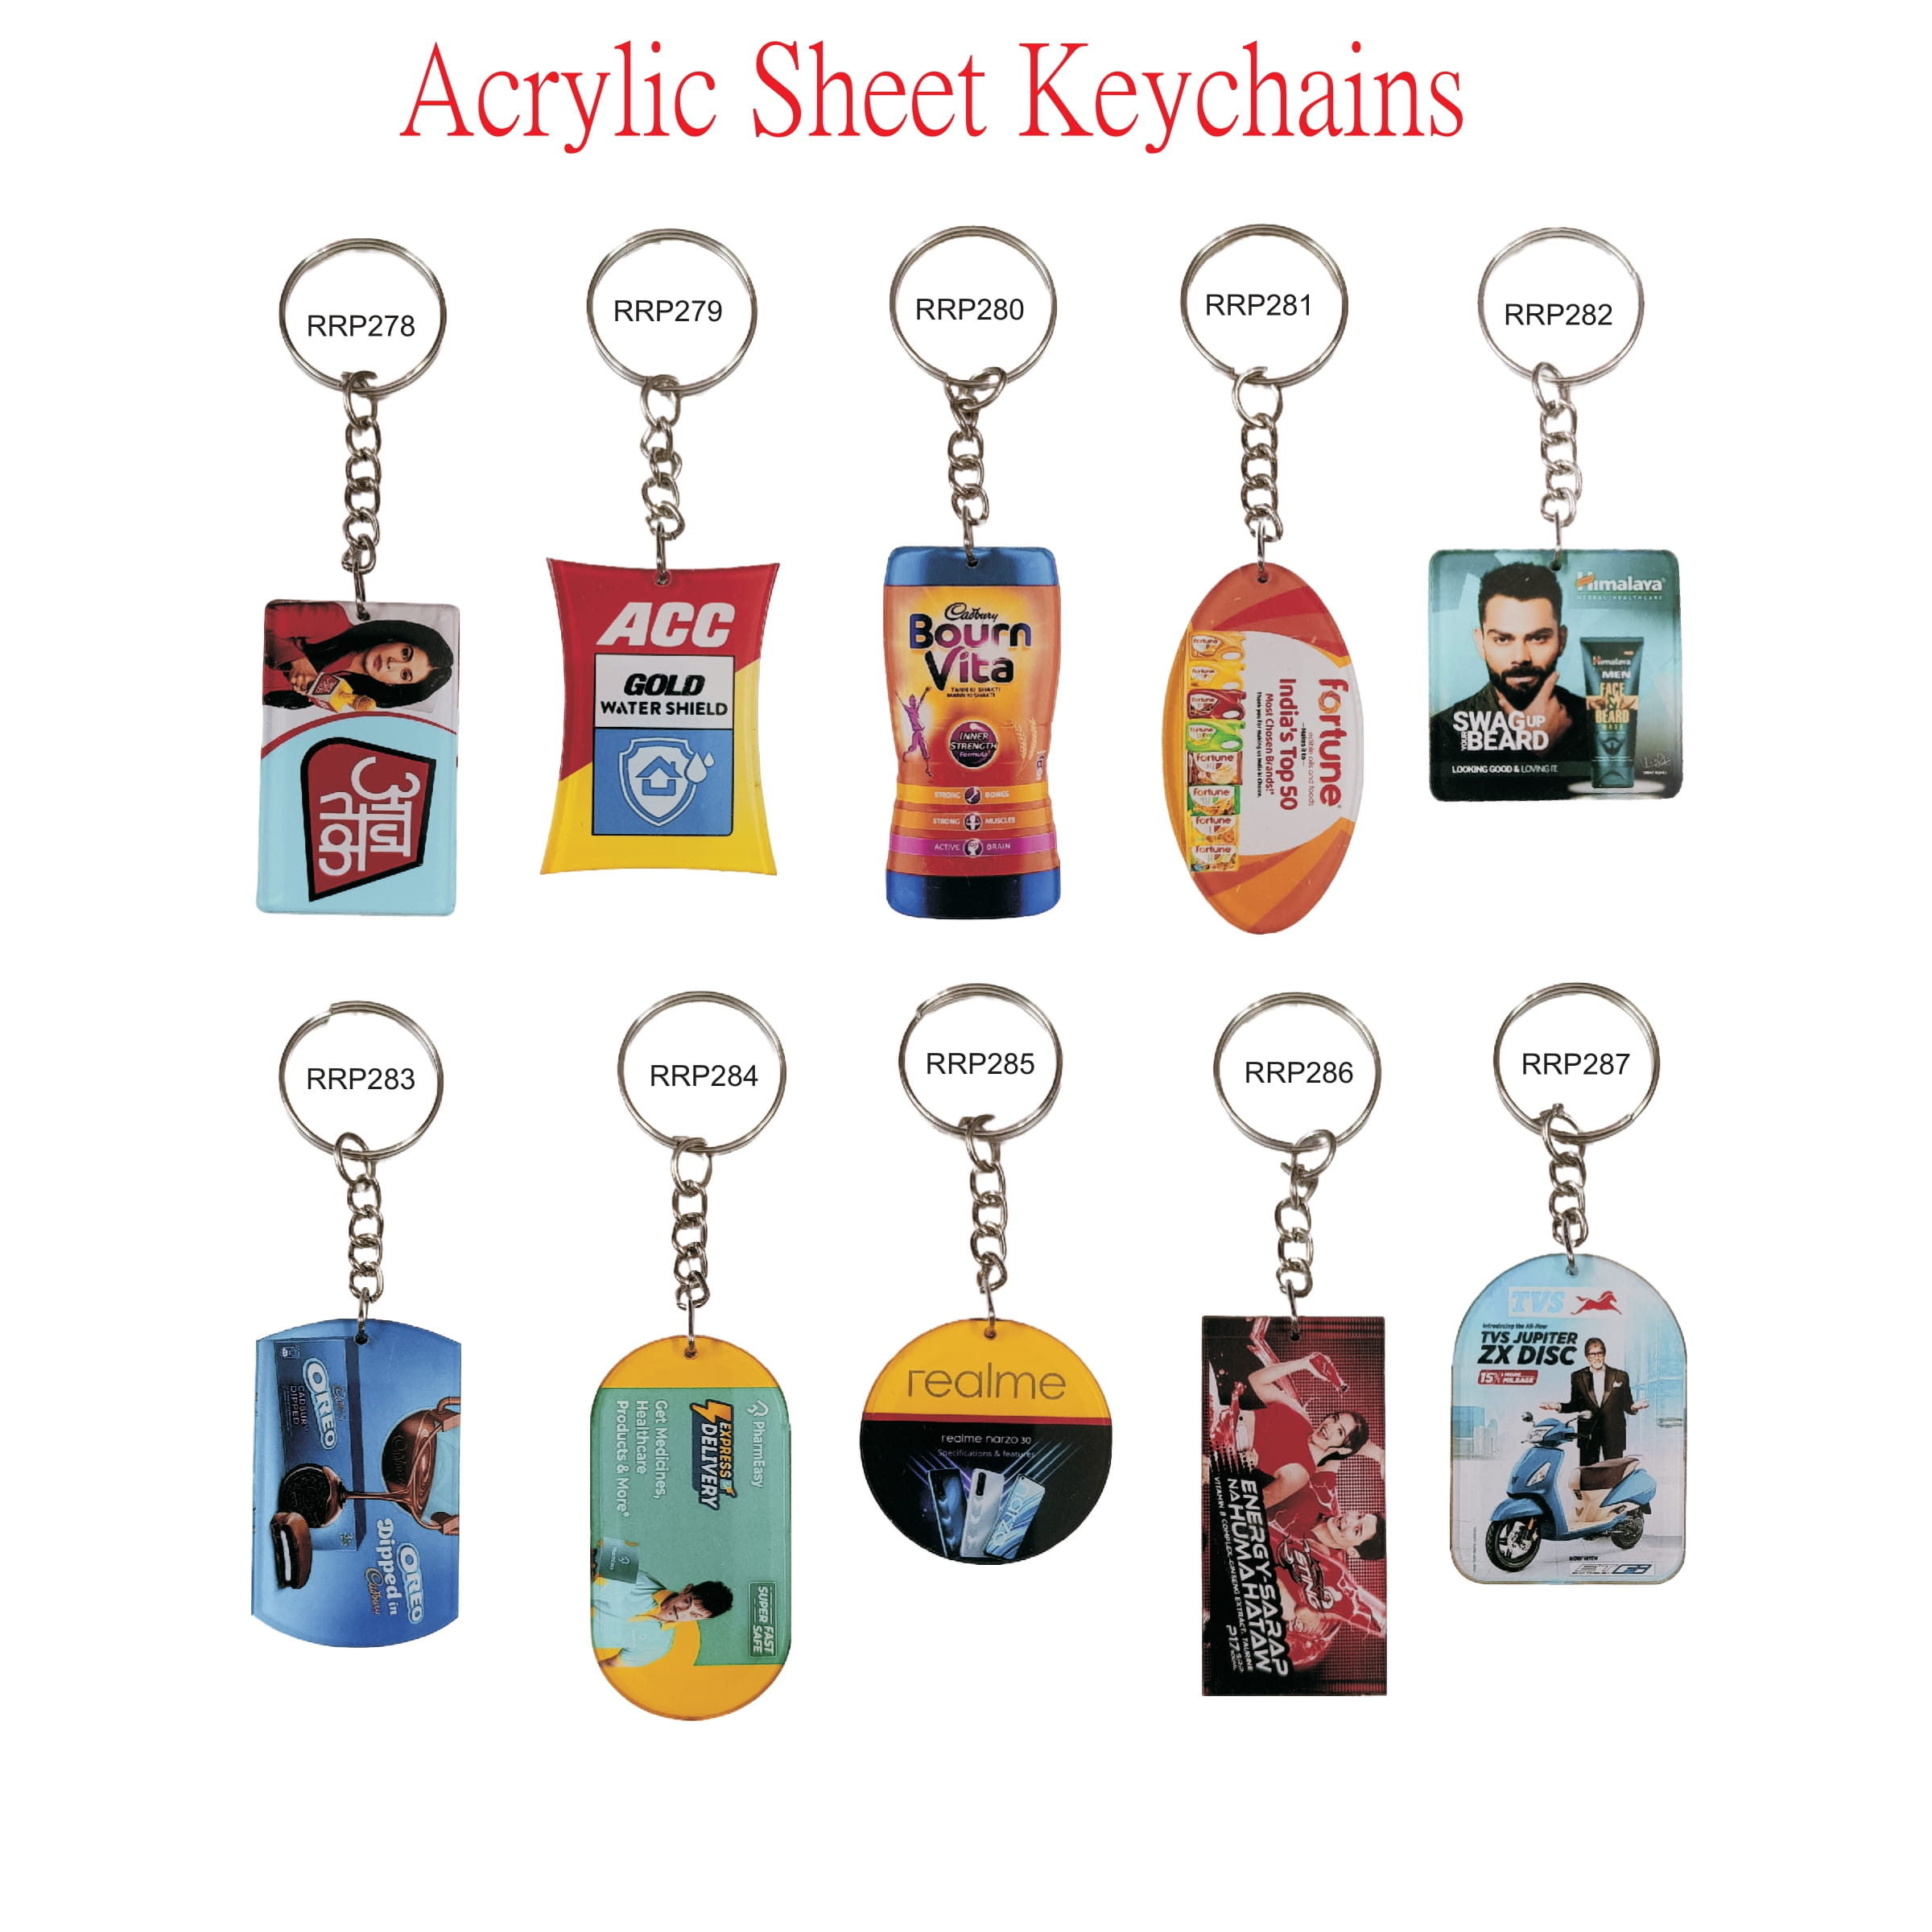 Acrylic Sheet Keychain